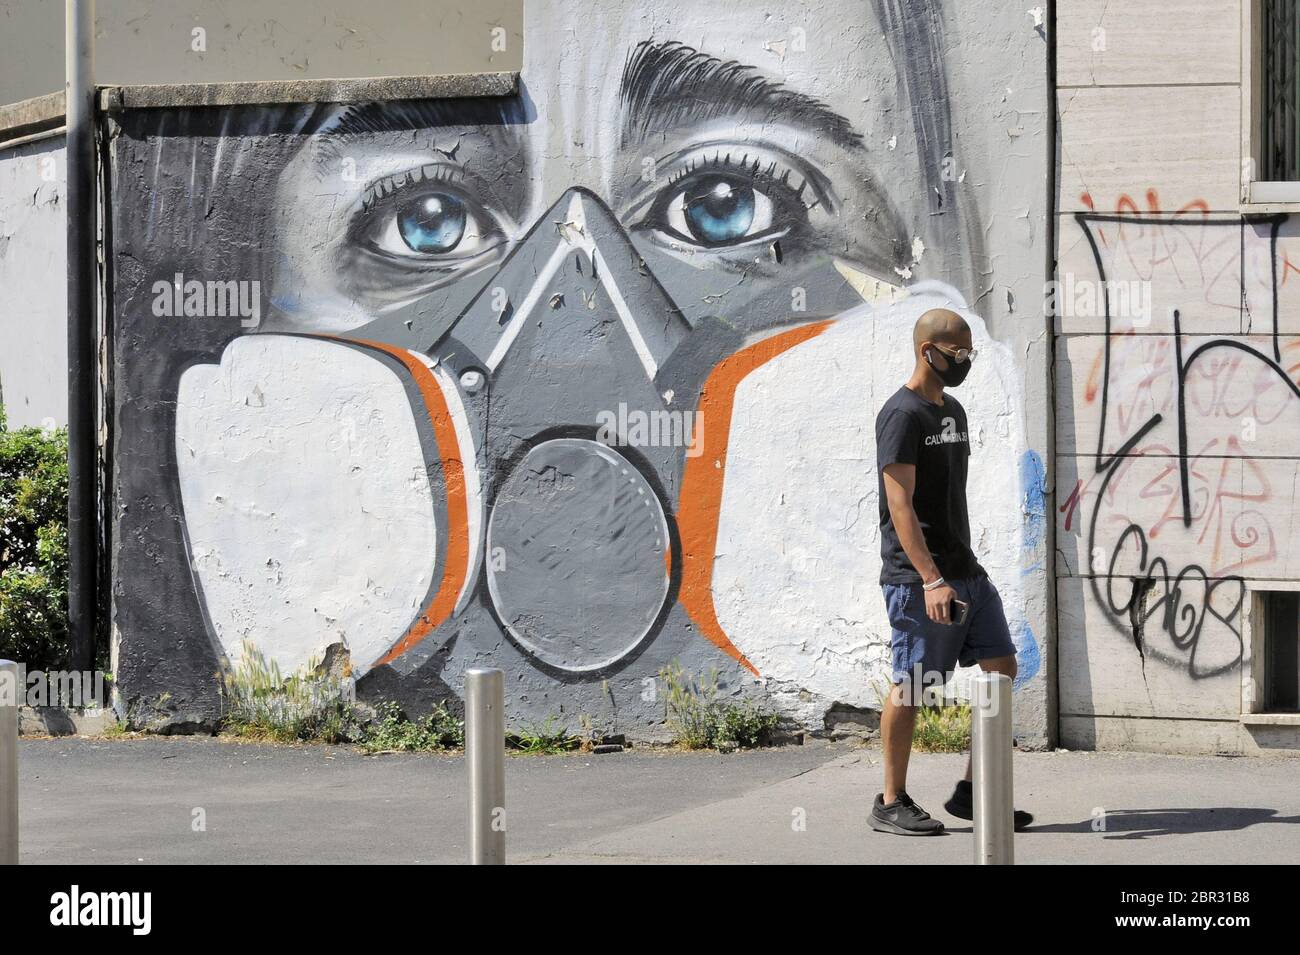 Milan (Italy), street art at the time of the Coronavirus epidemic Stock Photo